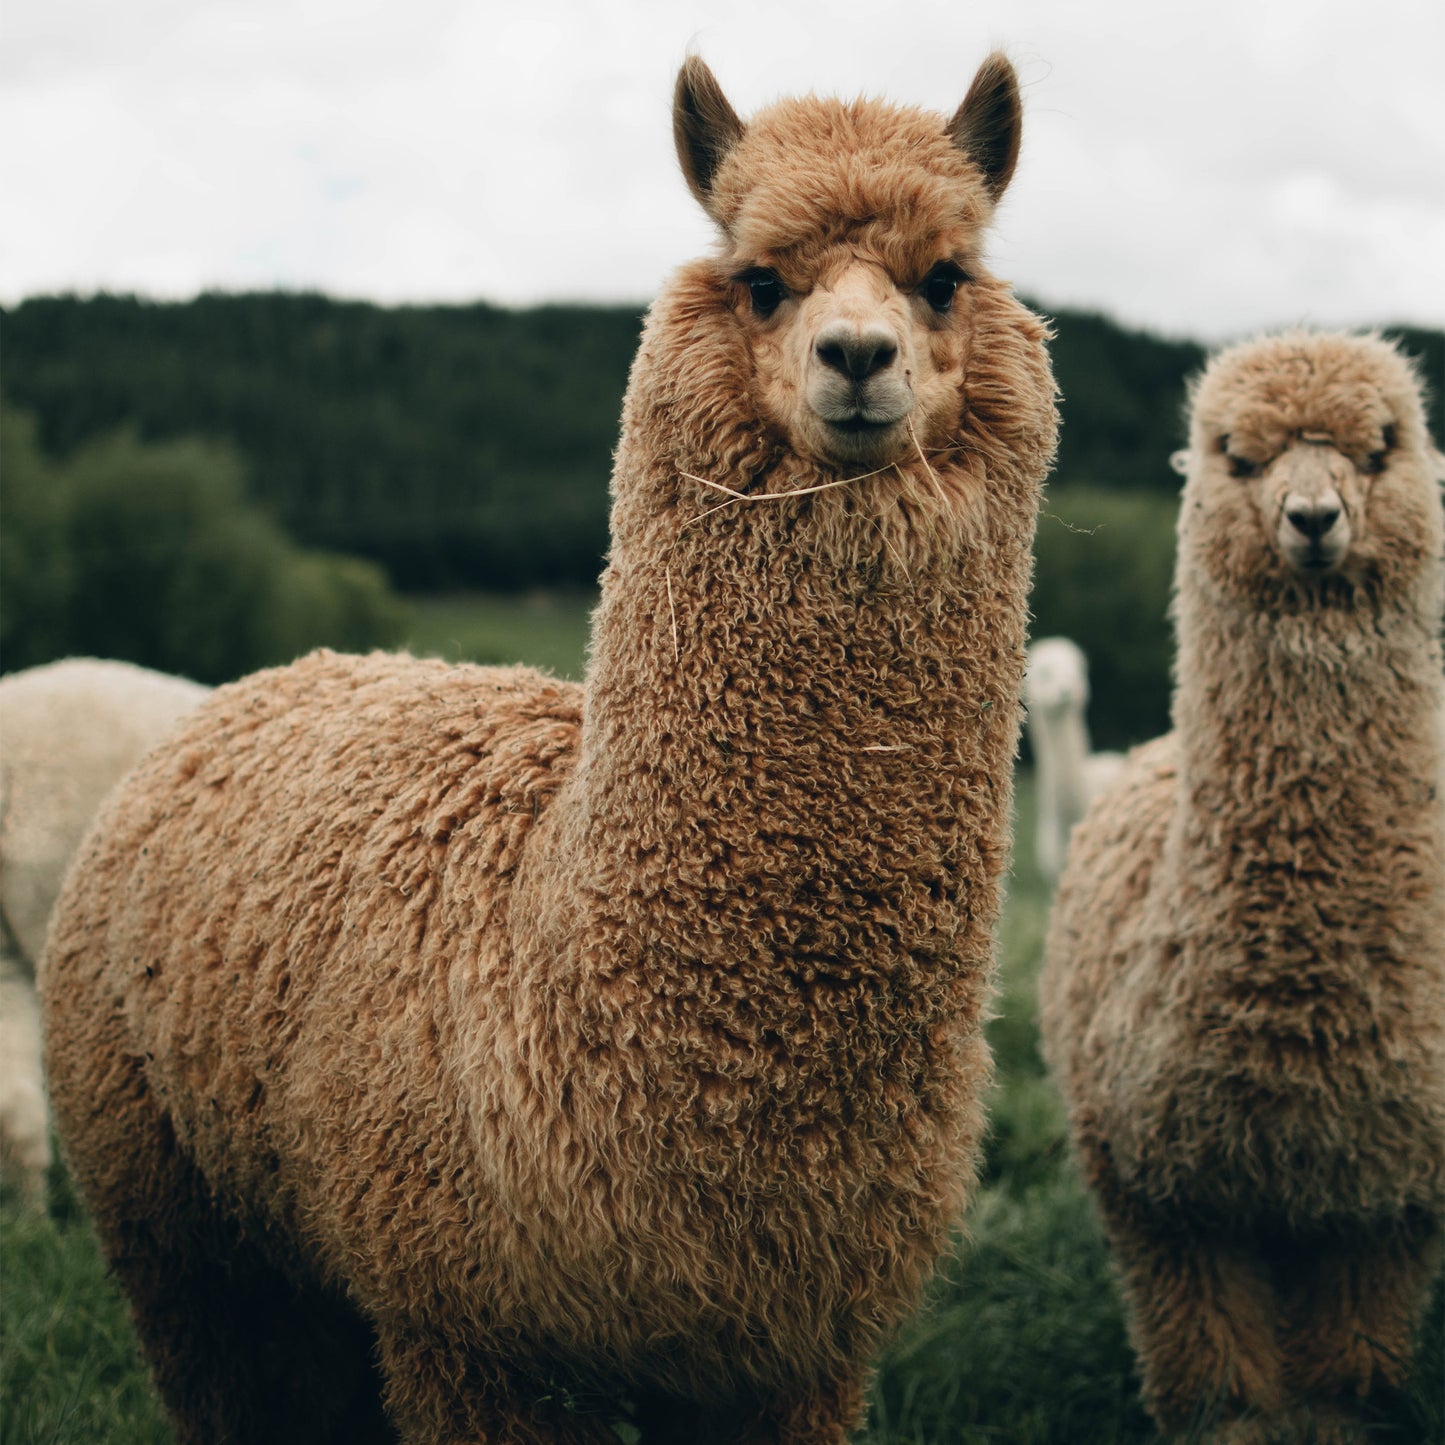 Alpaca fleece wool dryer balls - pack of 10 – refillwholesale